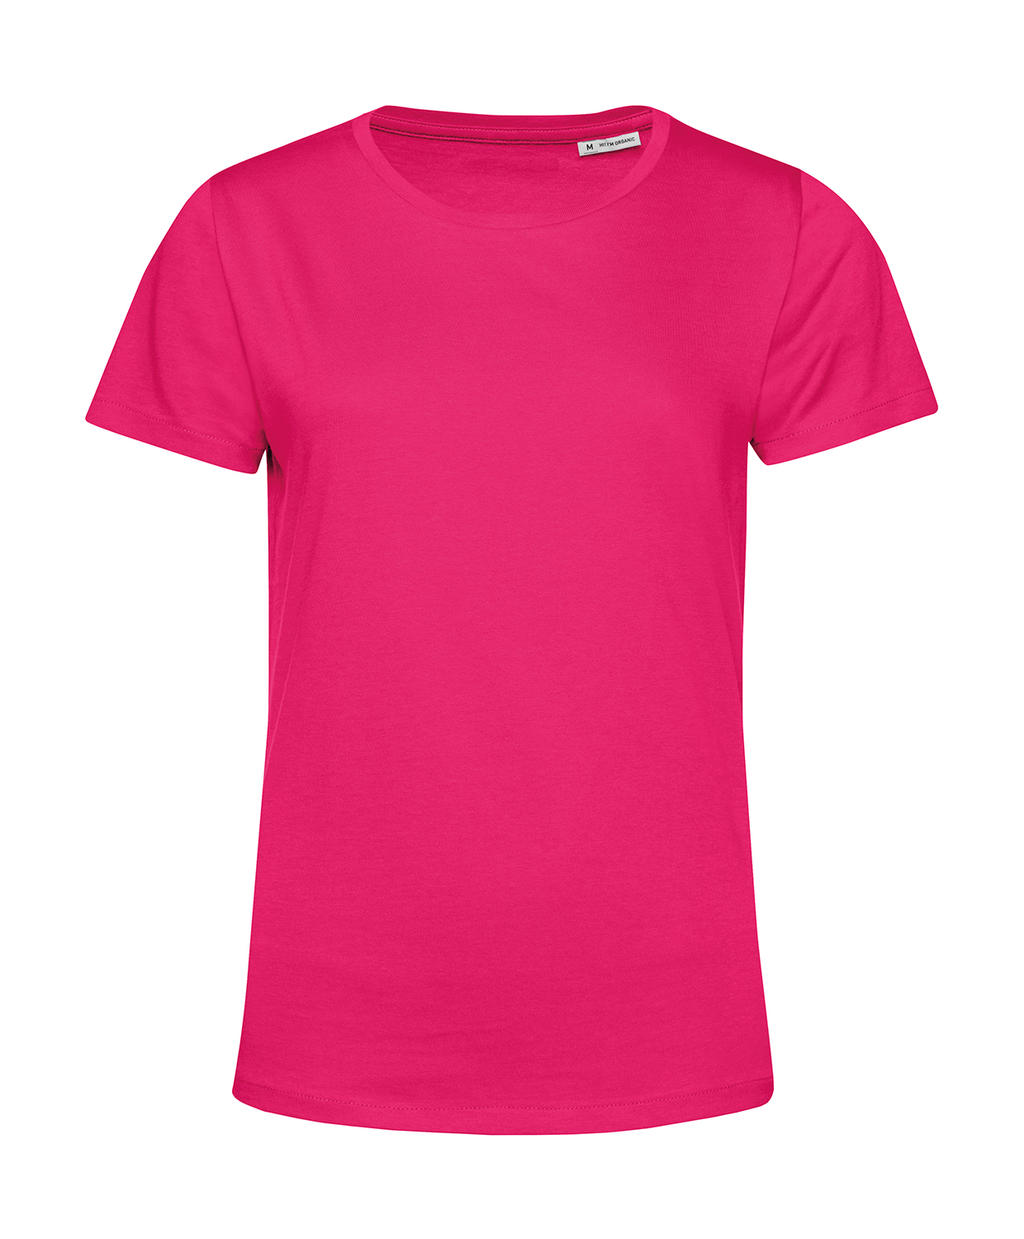 Tričko dámské BC Organic Inspire E150 - tmavě růžové, XL